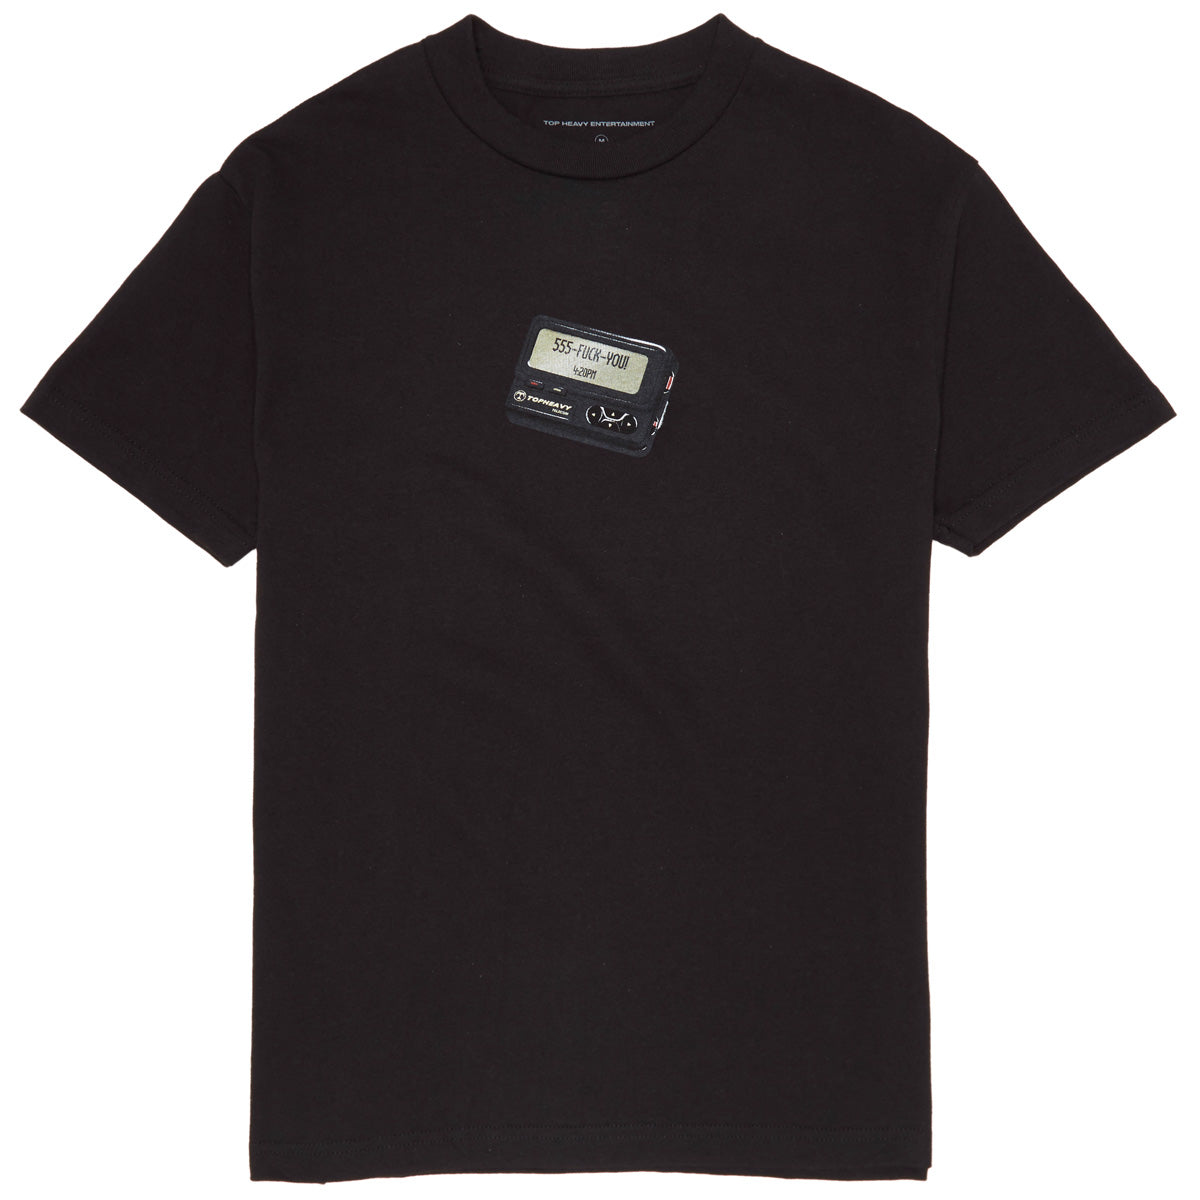 Top Heavy Beeper T-Shirt - Black image 1